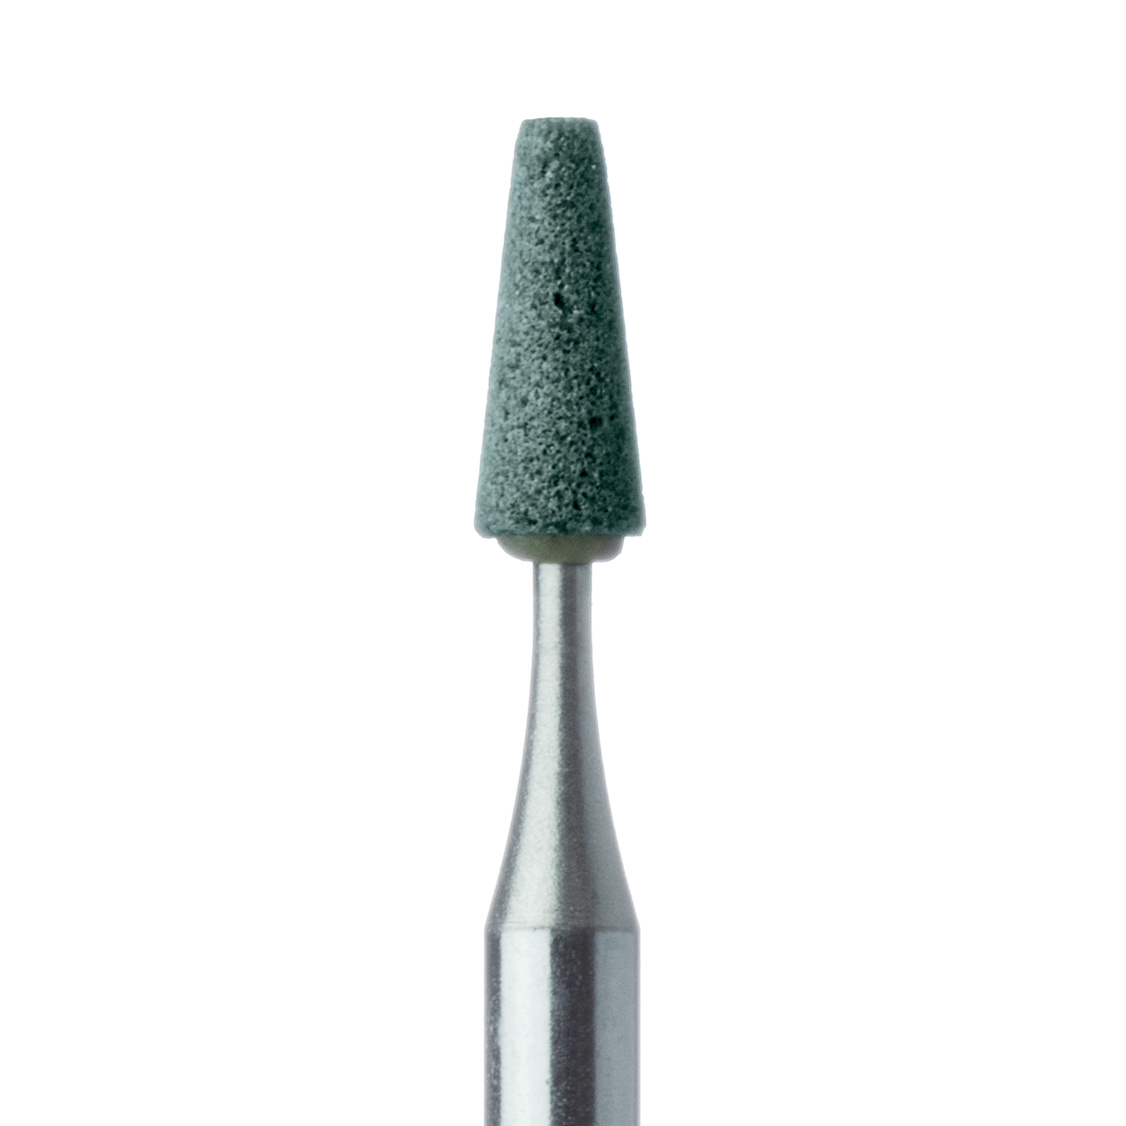 649-025-RA-GRN Abrasive, Green Flat End Taper, 2.5mm RA